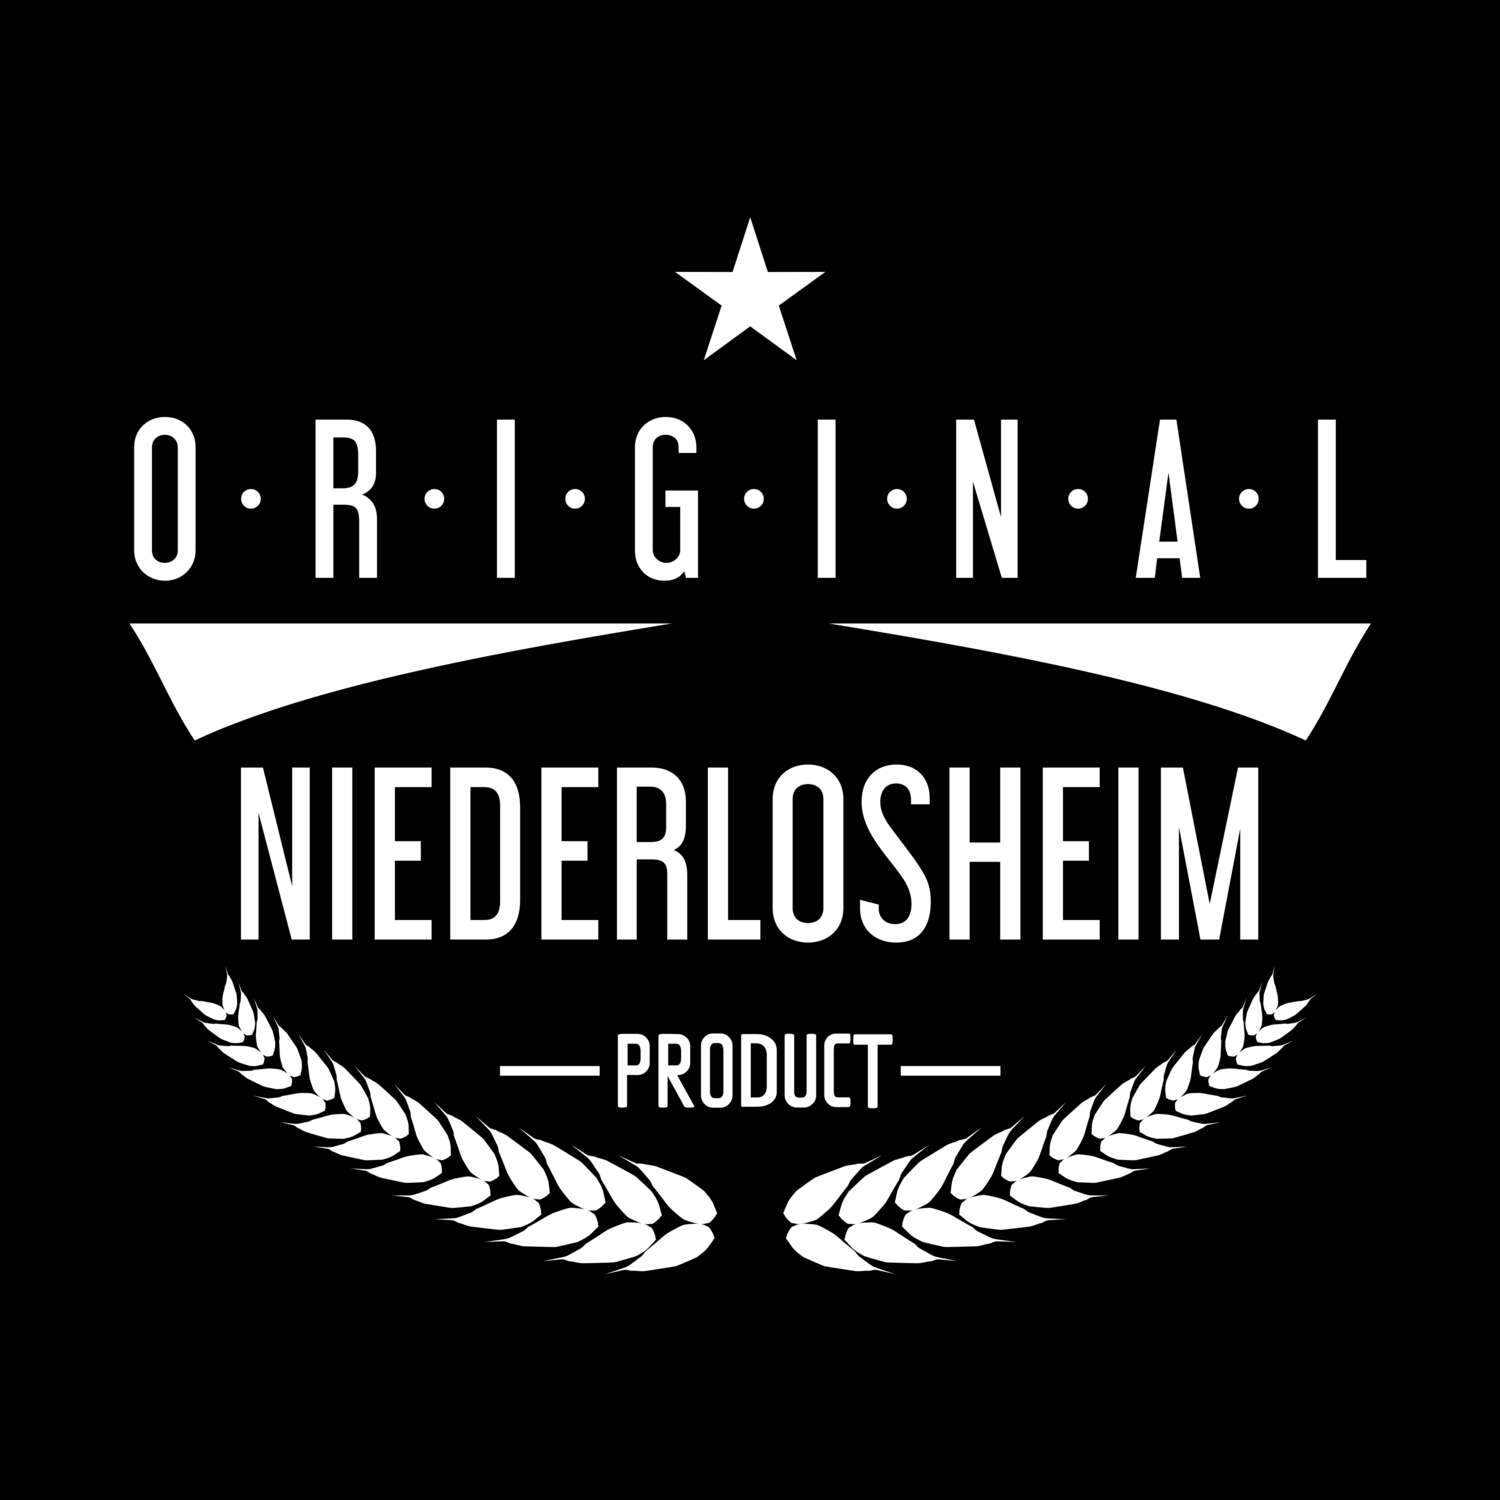 Niederlosheim T-Shirt »Original Product«